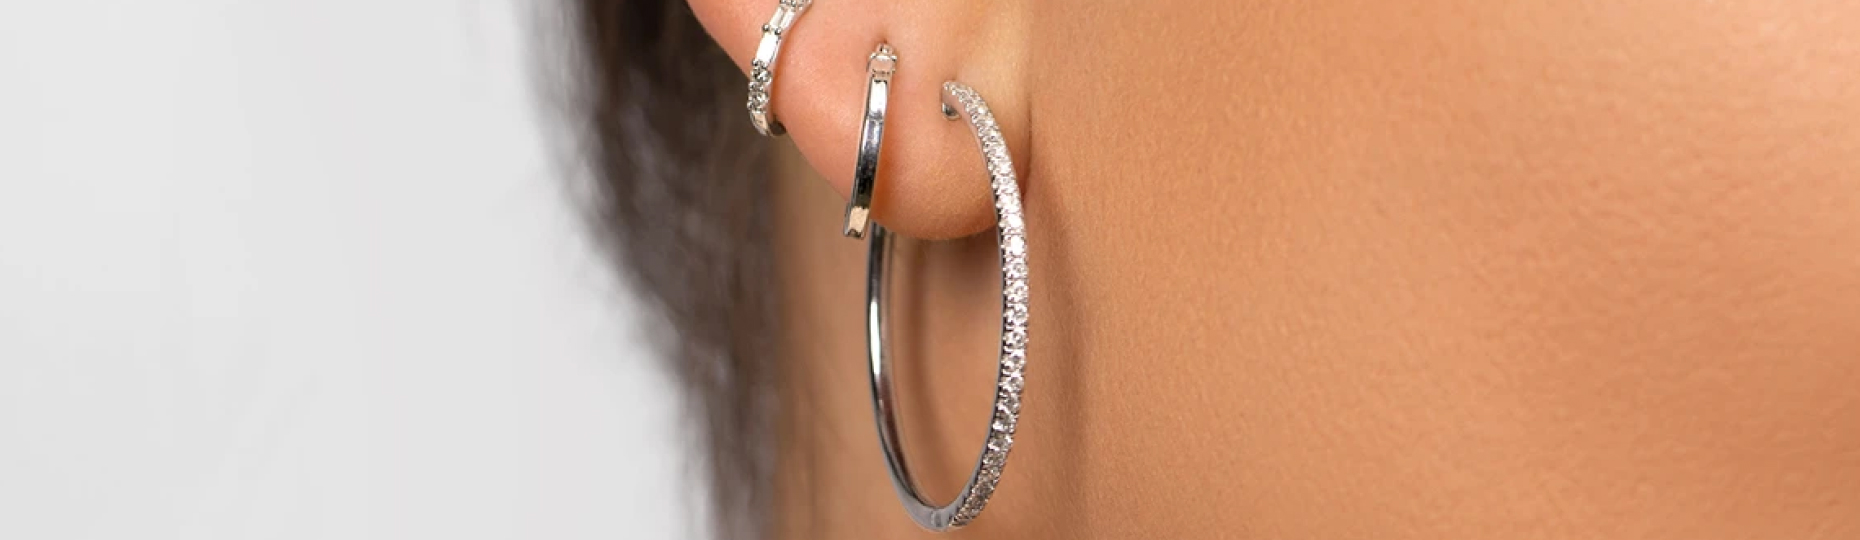 Woman wearing diamond hoop earrings